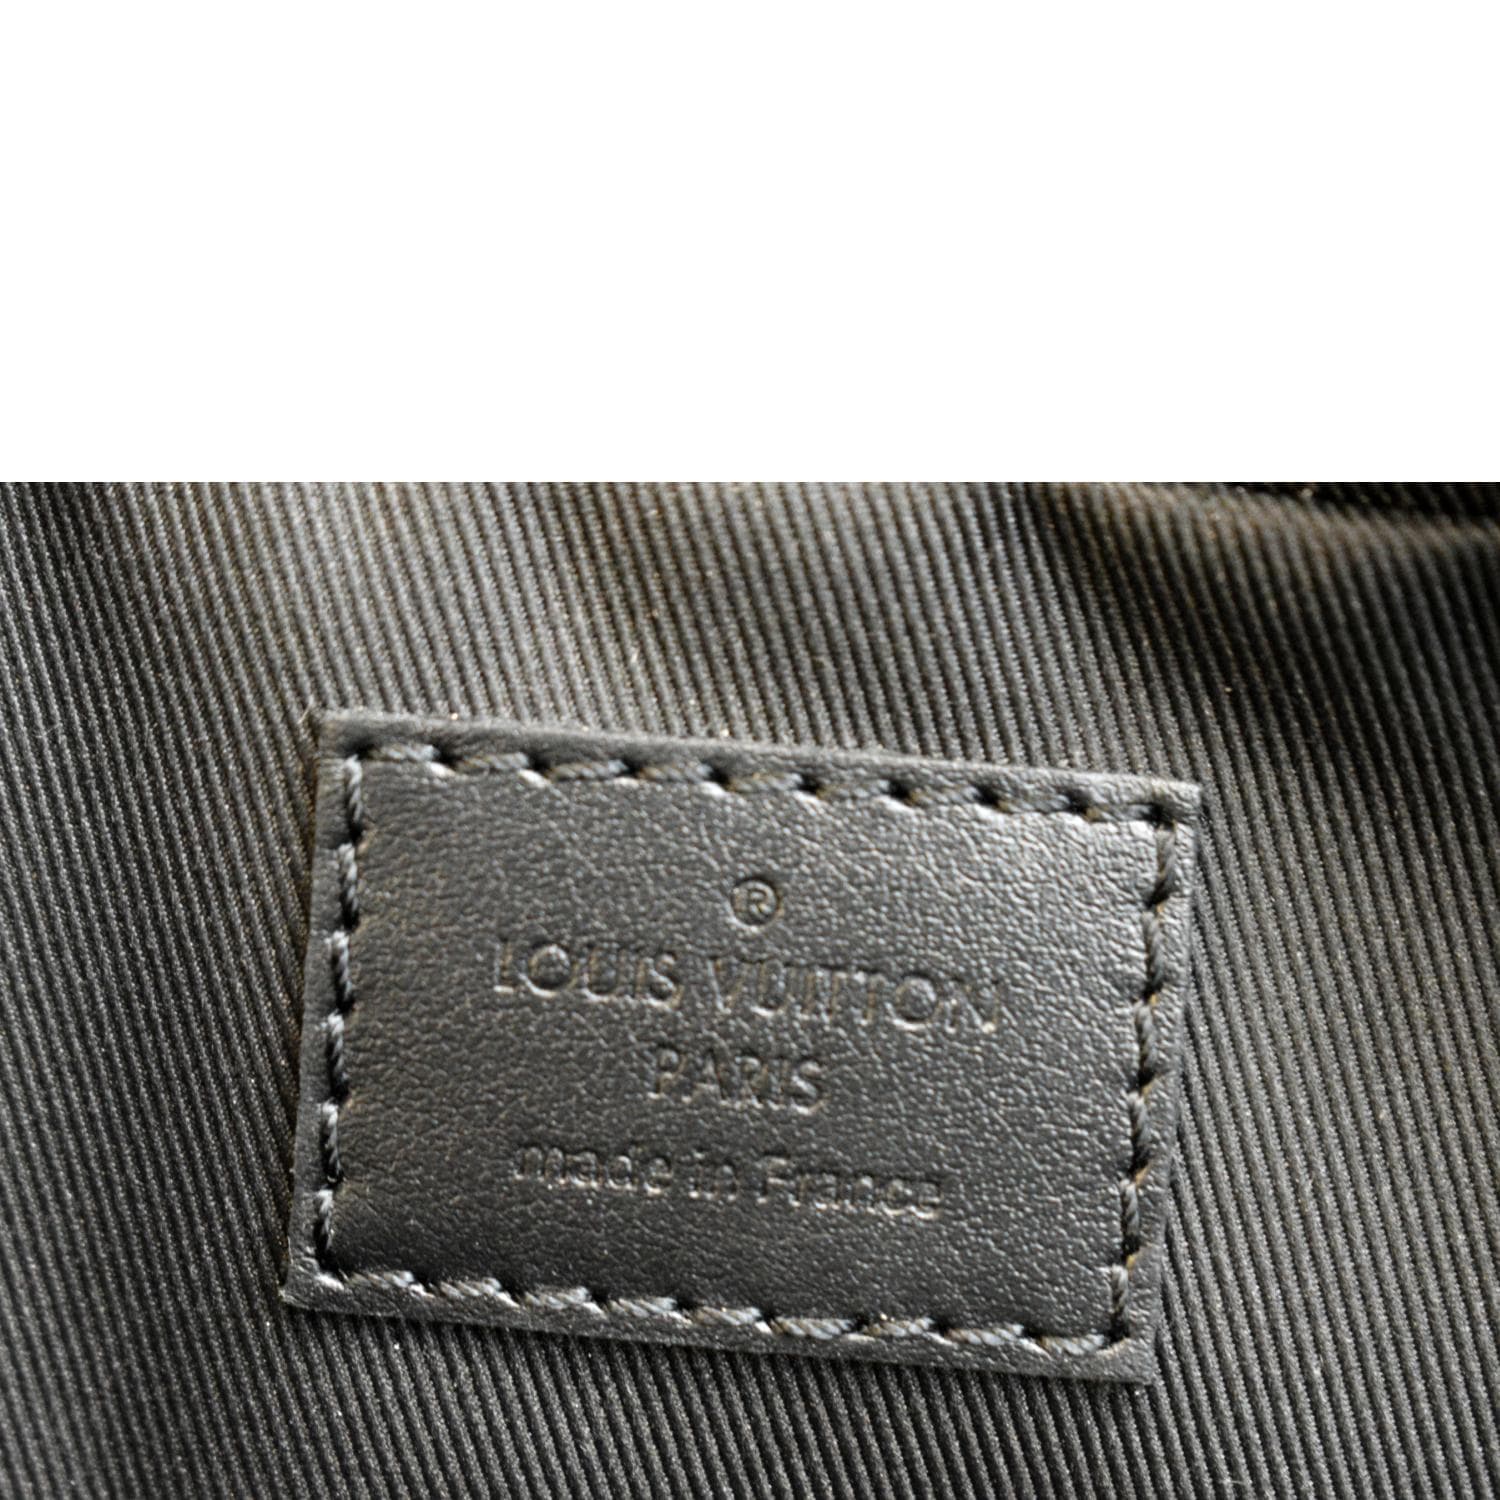 Louis Vuitton MONOGRAM Louis Vuitton TRIO BACKPACK